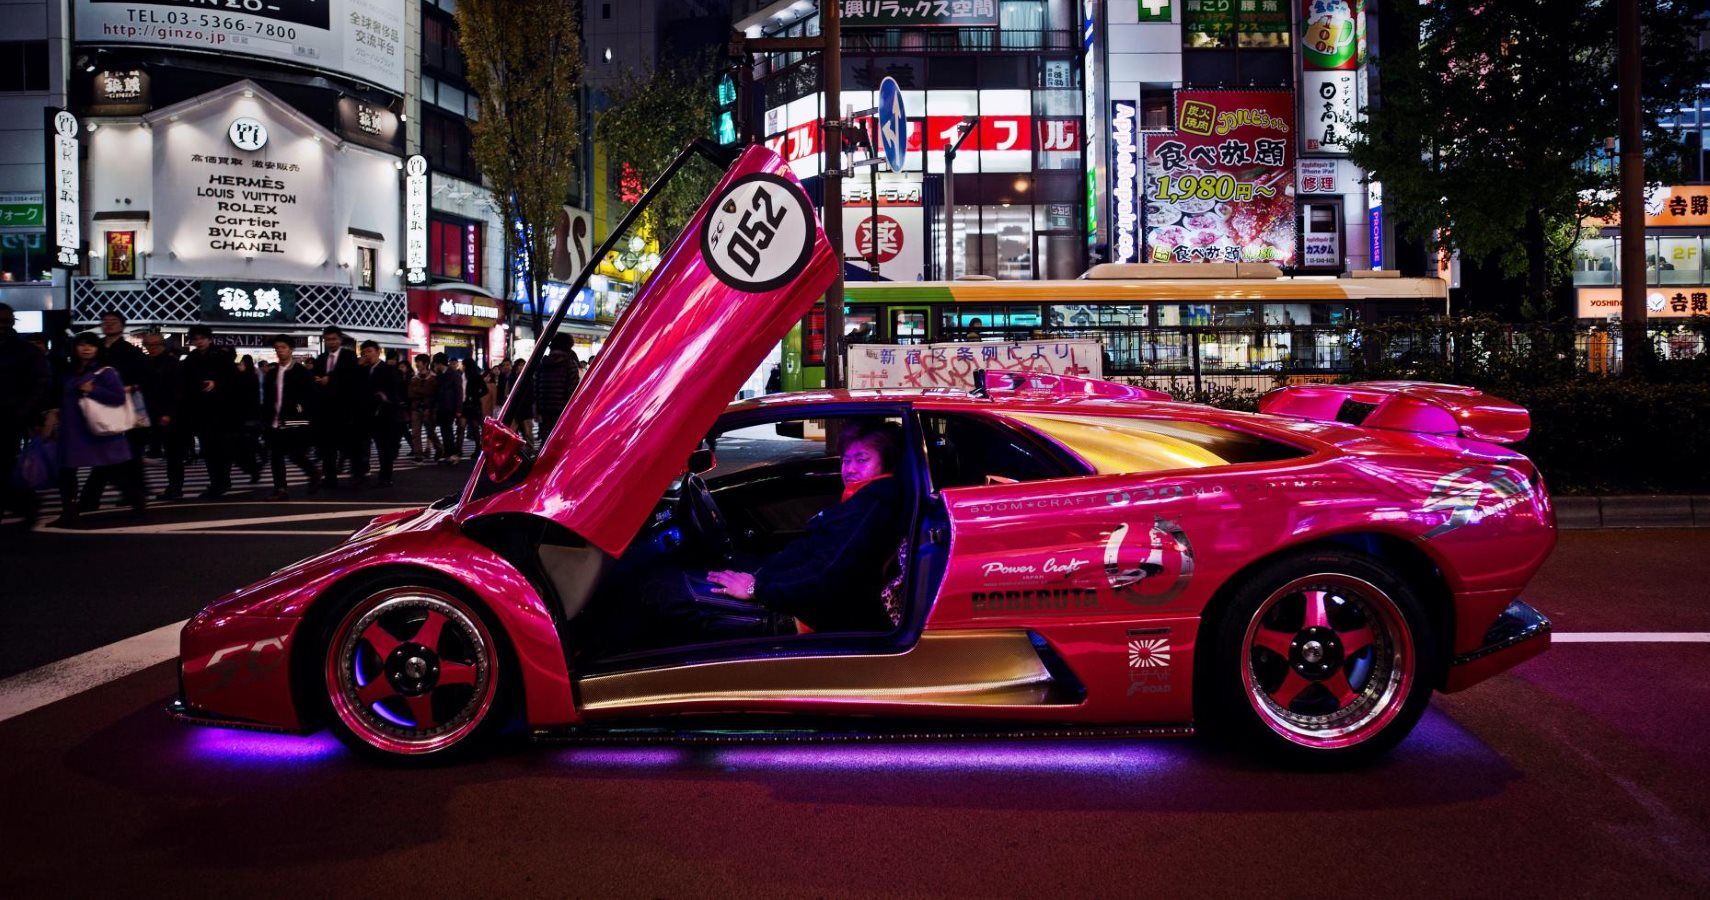 This Pink Lamborghini Diablo Is Absolutely Insane